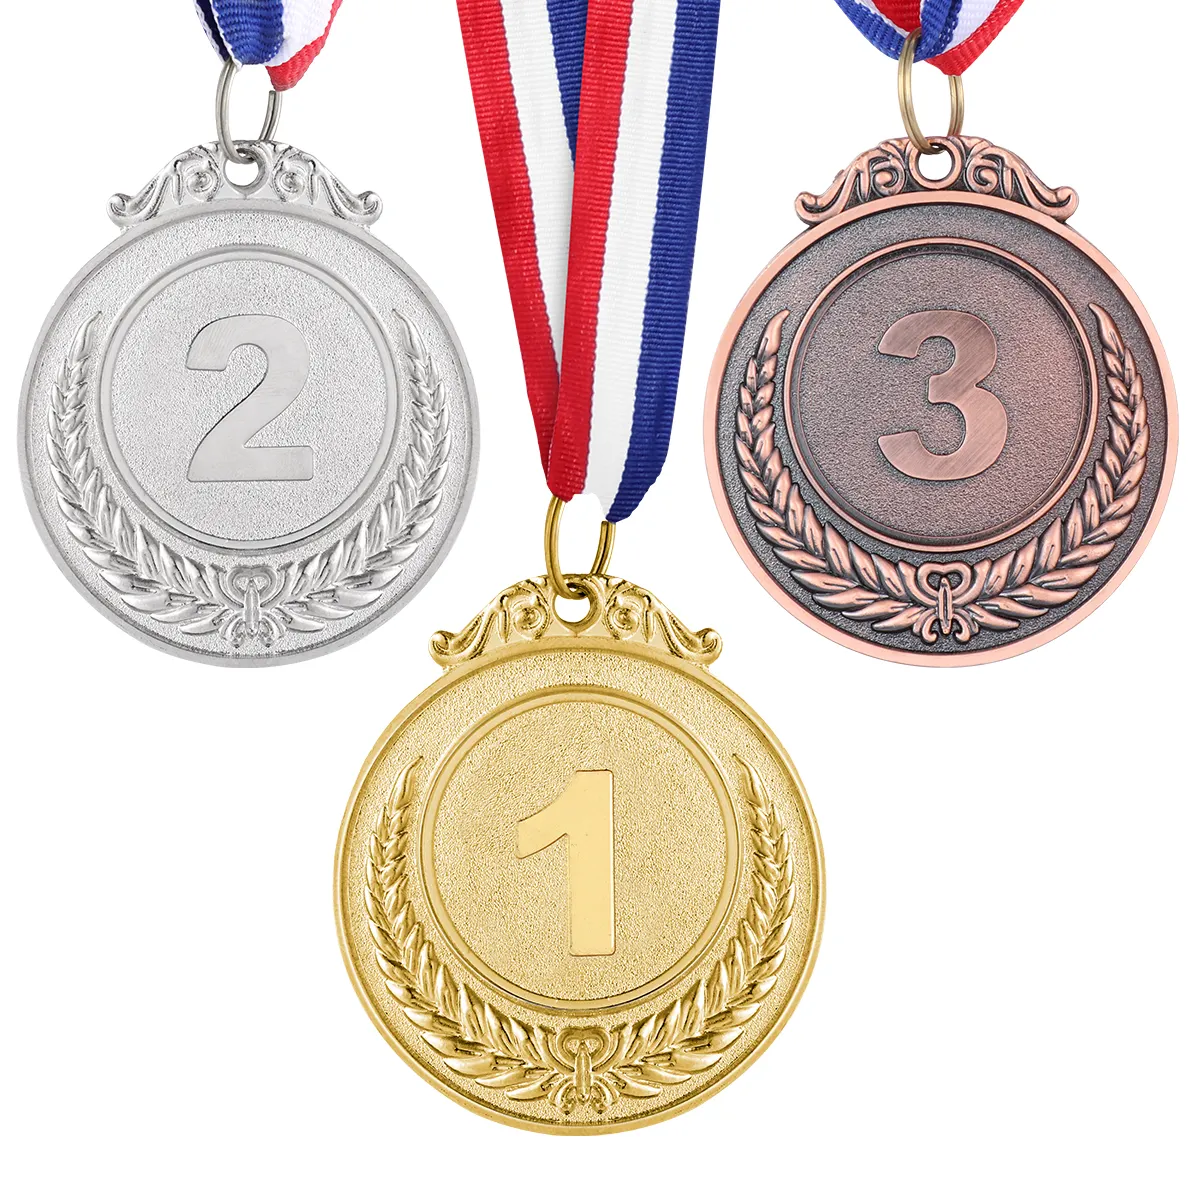 Giftin-medalla de premio deportivo de fútbol, medalla de doble logotipo 3D personalizada en oro bañado en cobre con cinta de sublimación